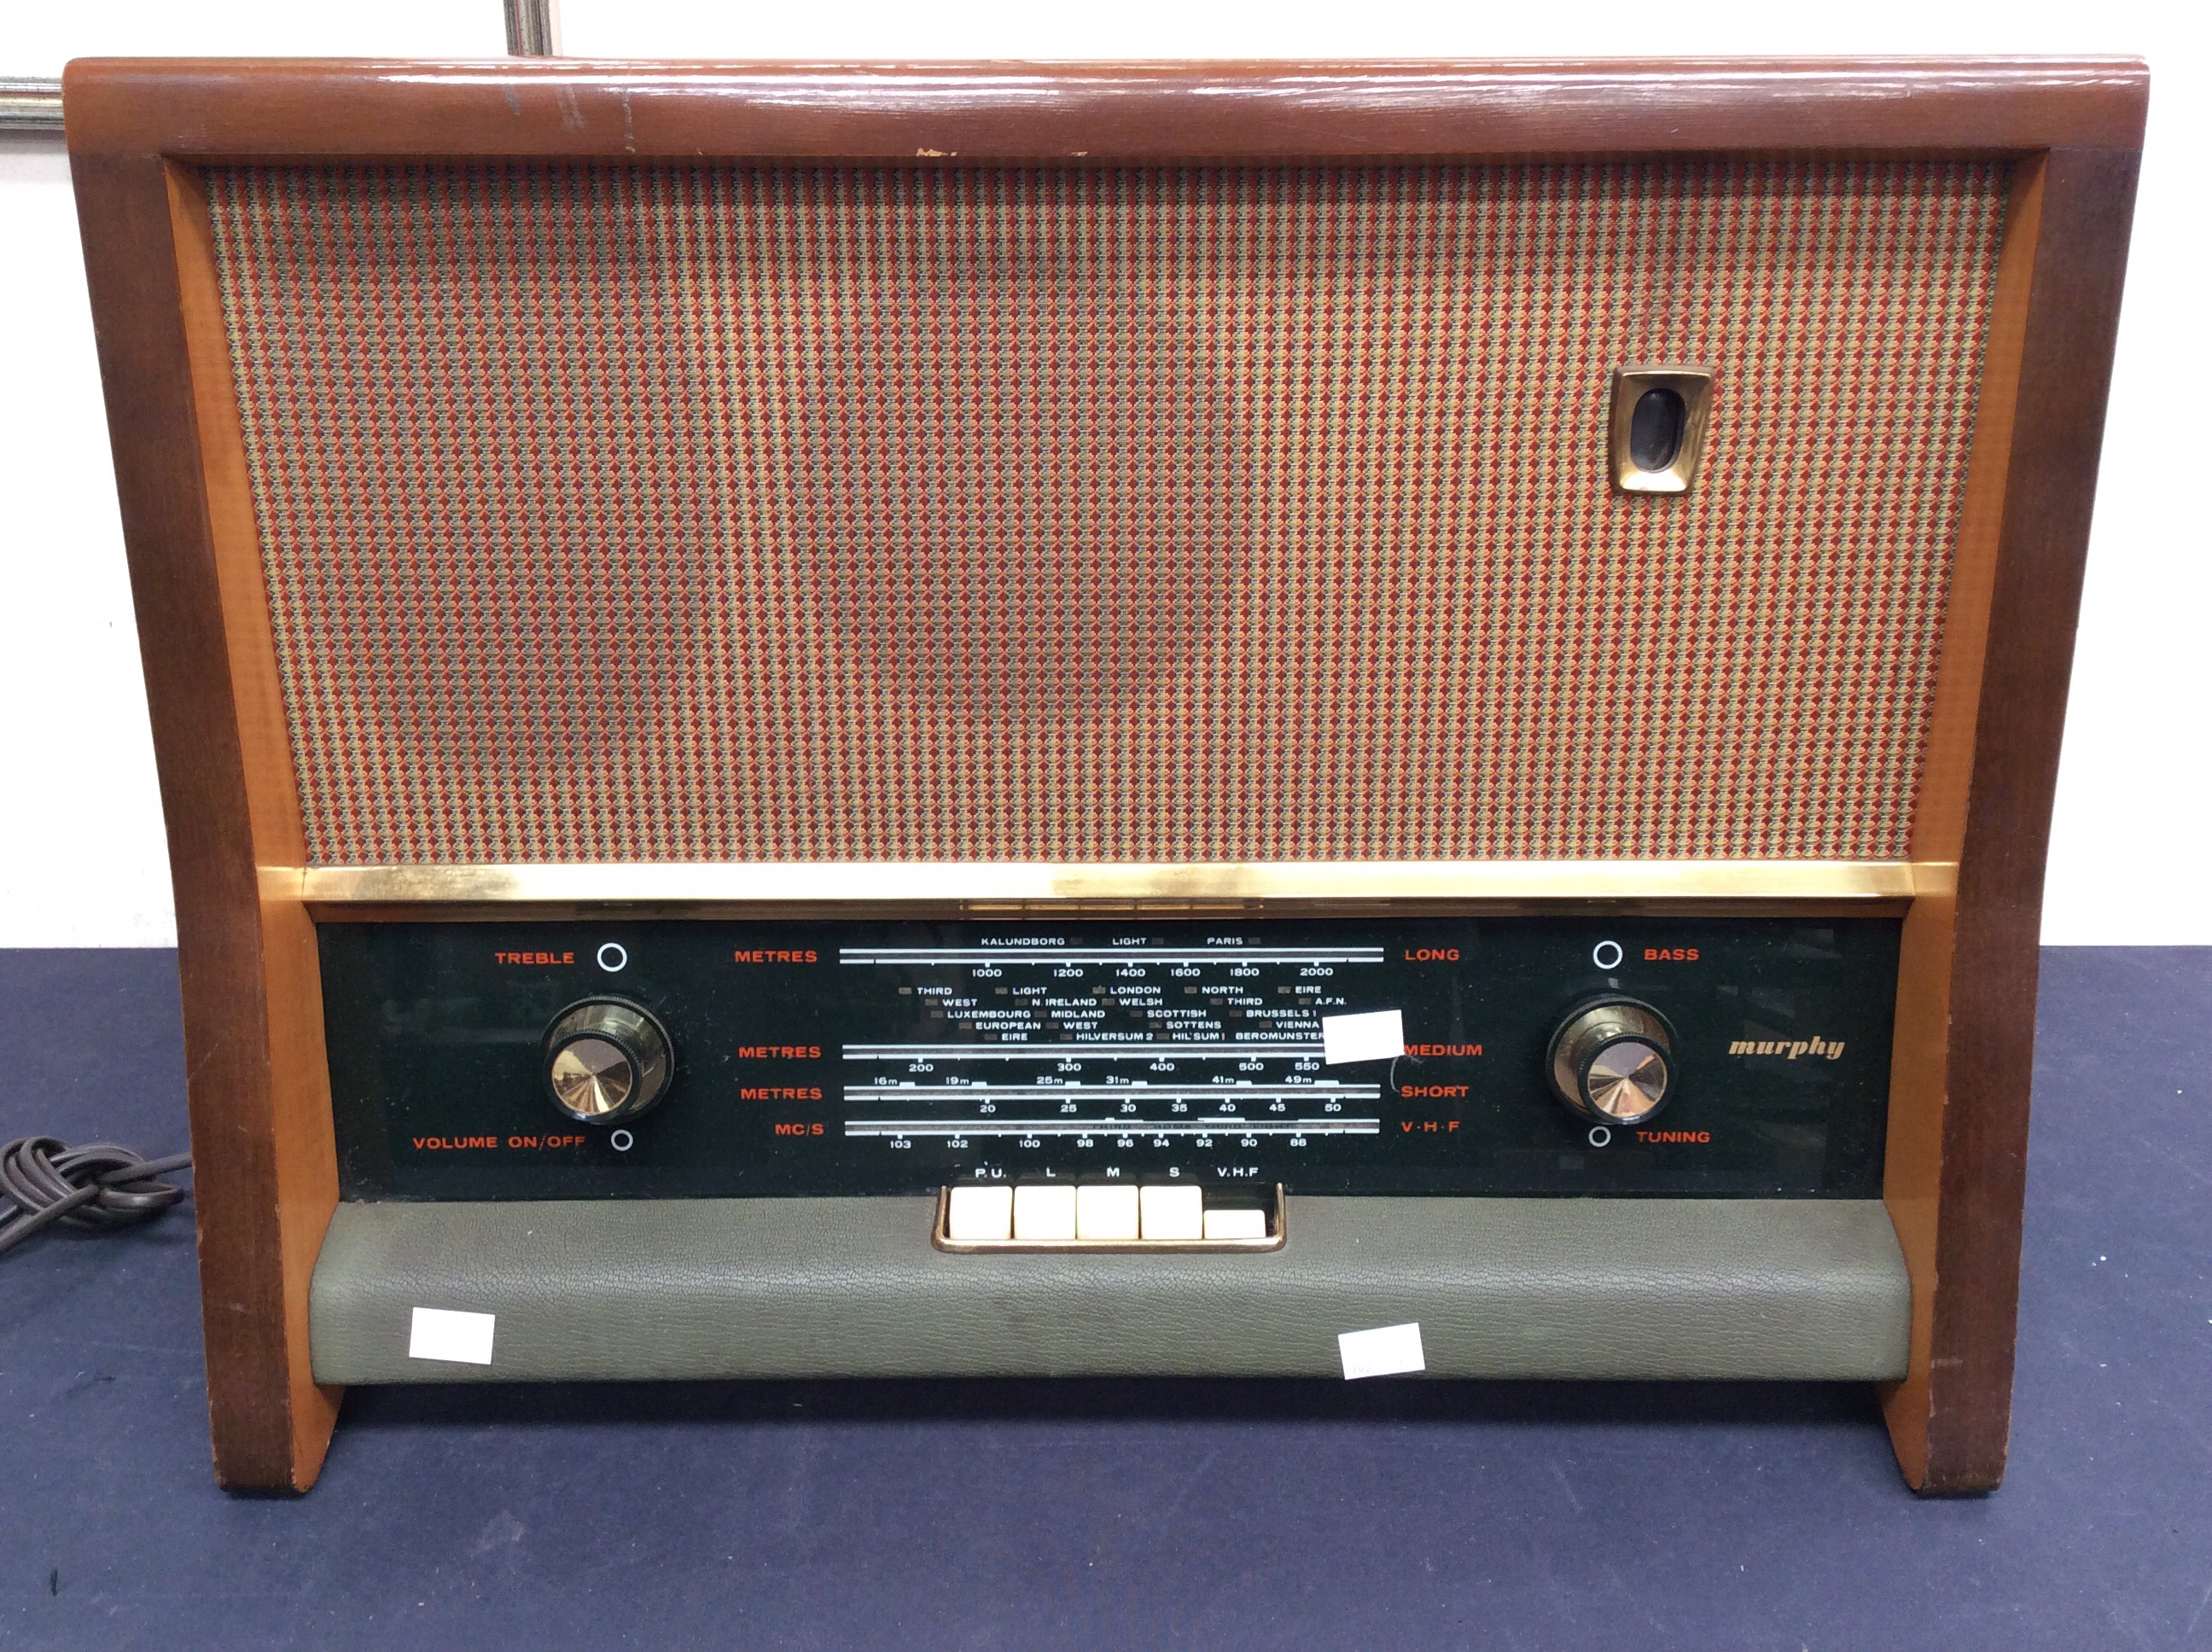 A mid 20th Century table top radio.